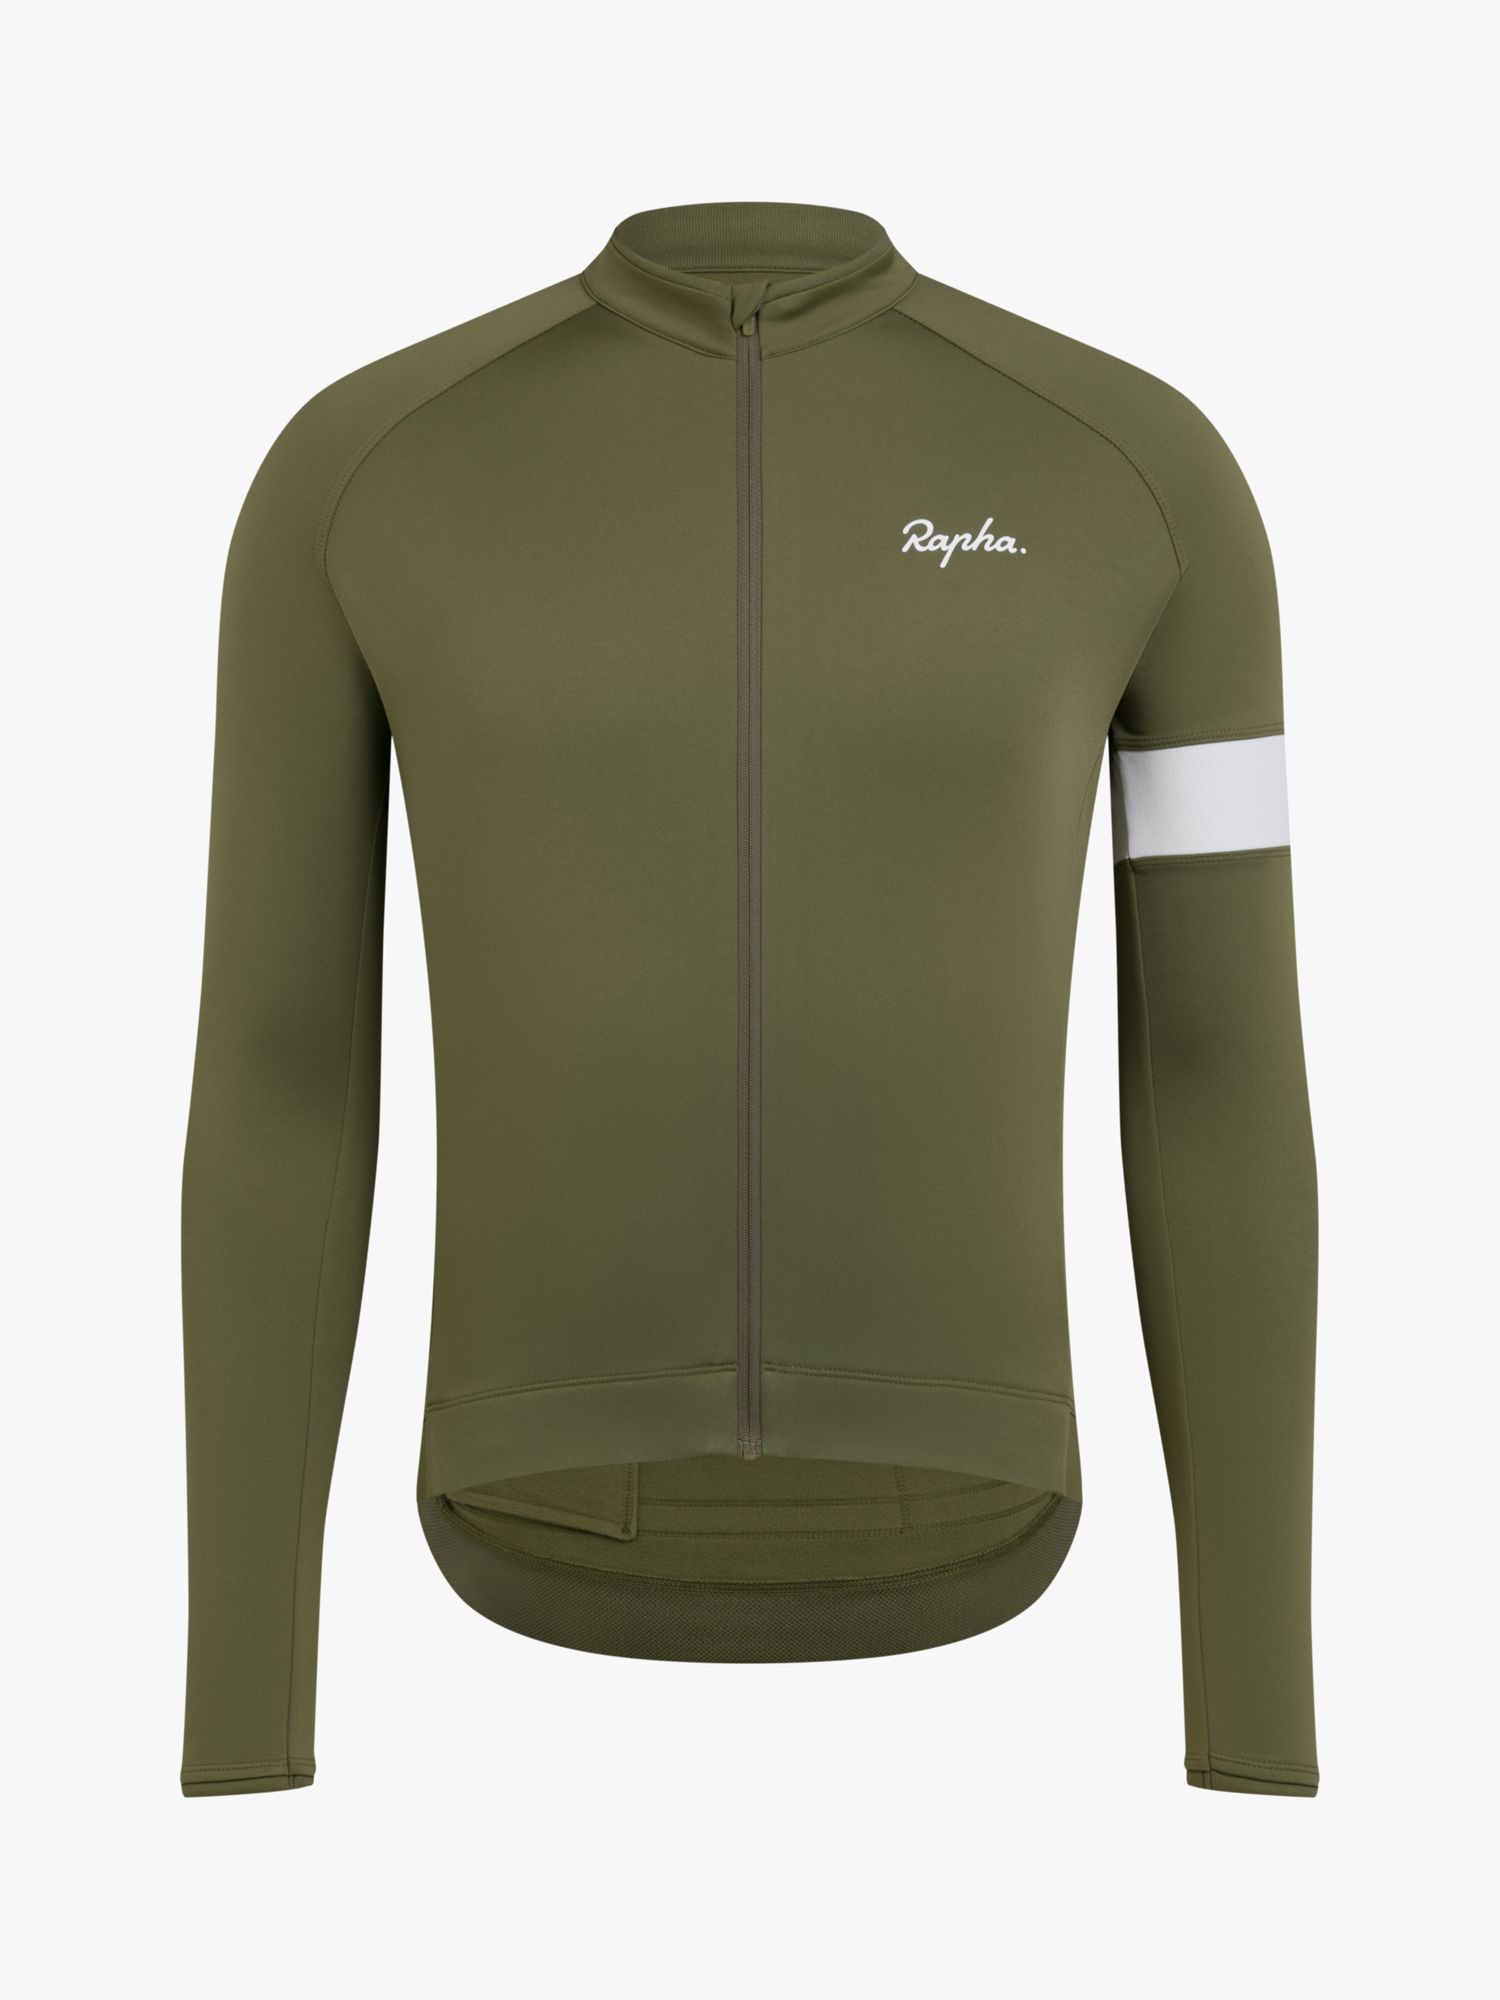 Rapha Core Jersey Long Sleeve Cycling Top, Green, M